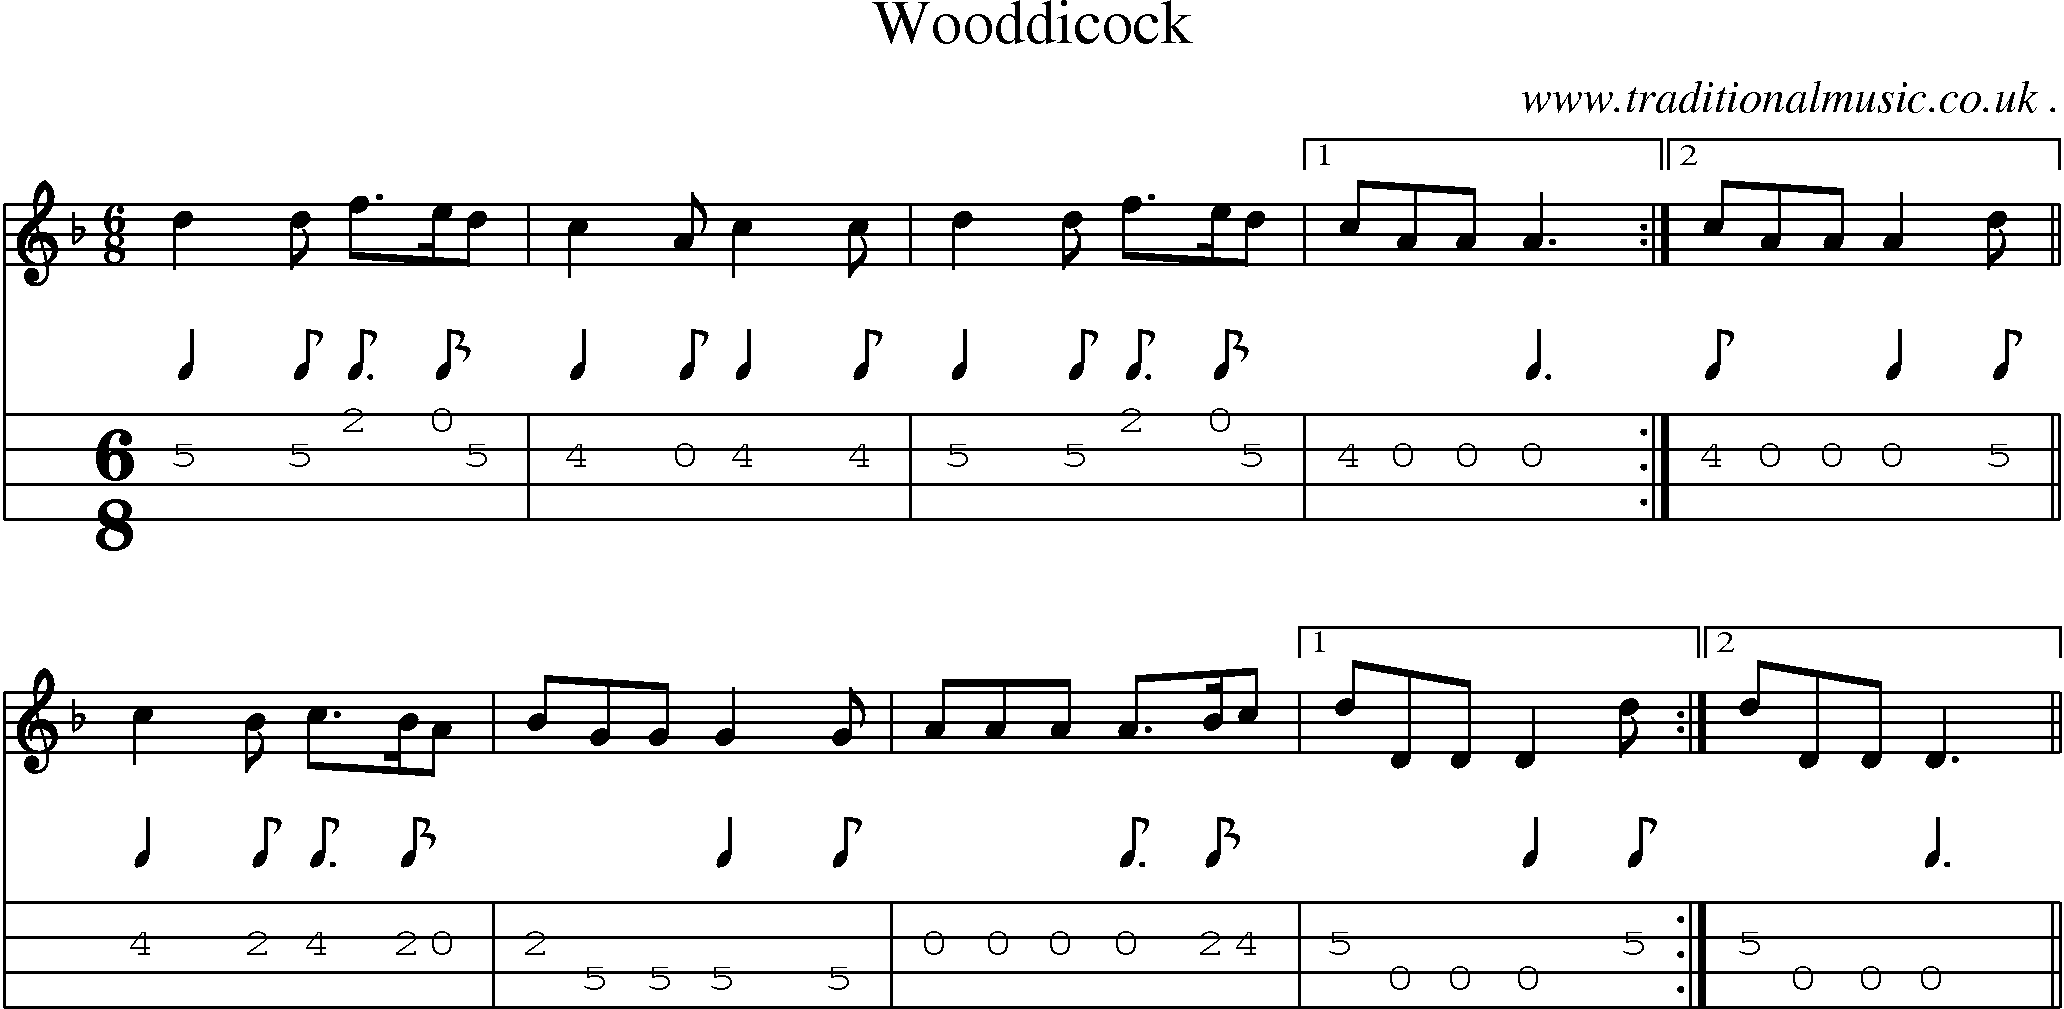 Sheet-Music and Mandolin Tabs for Wooddicock